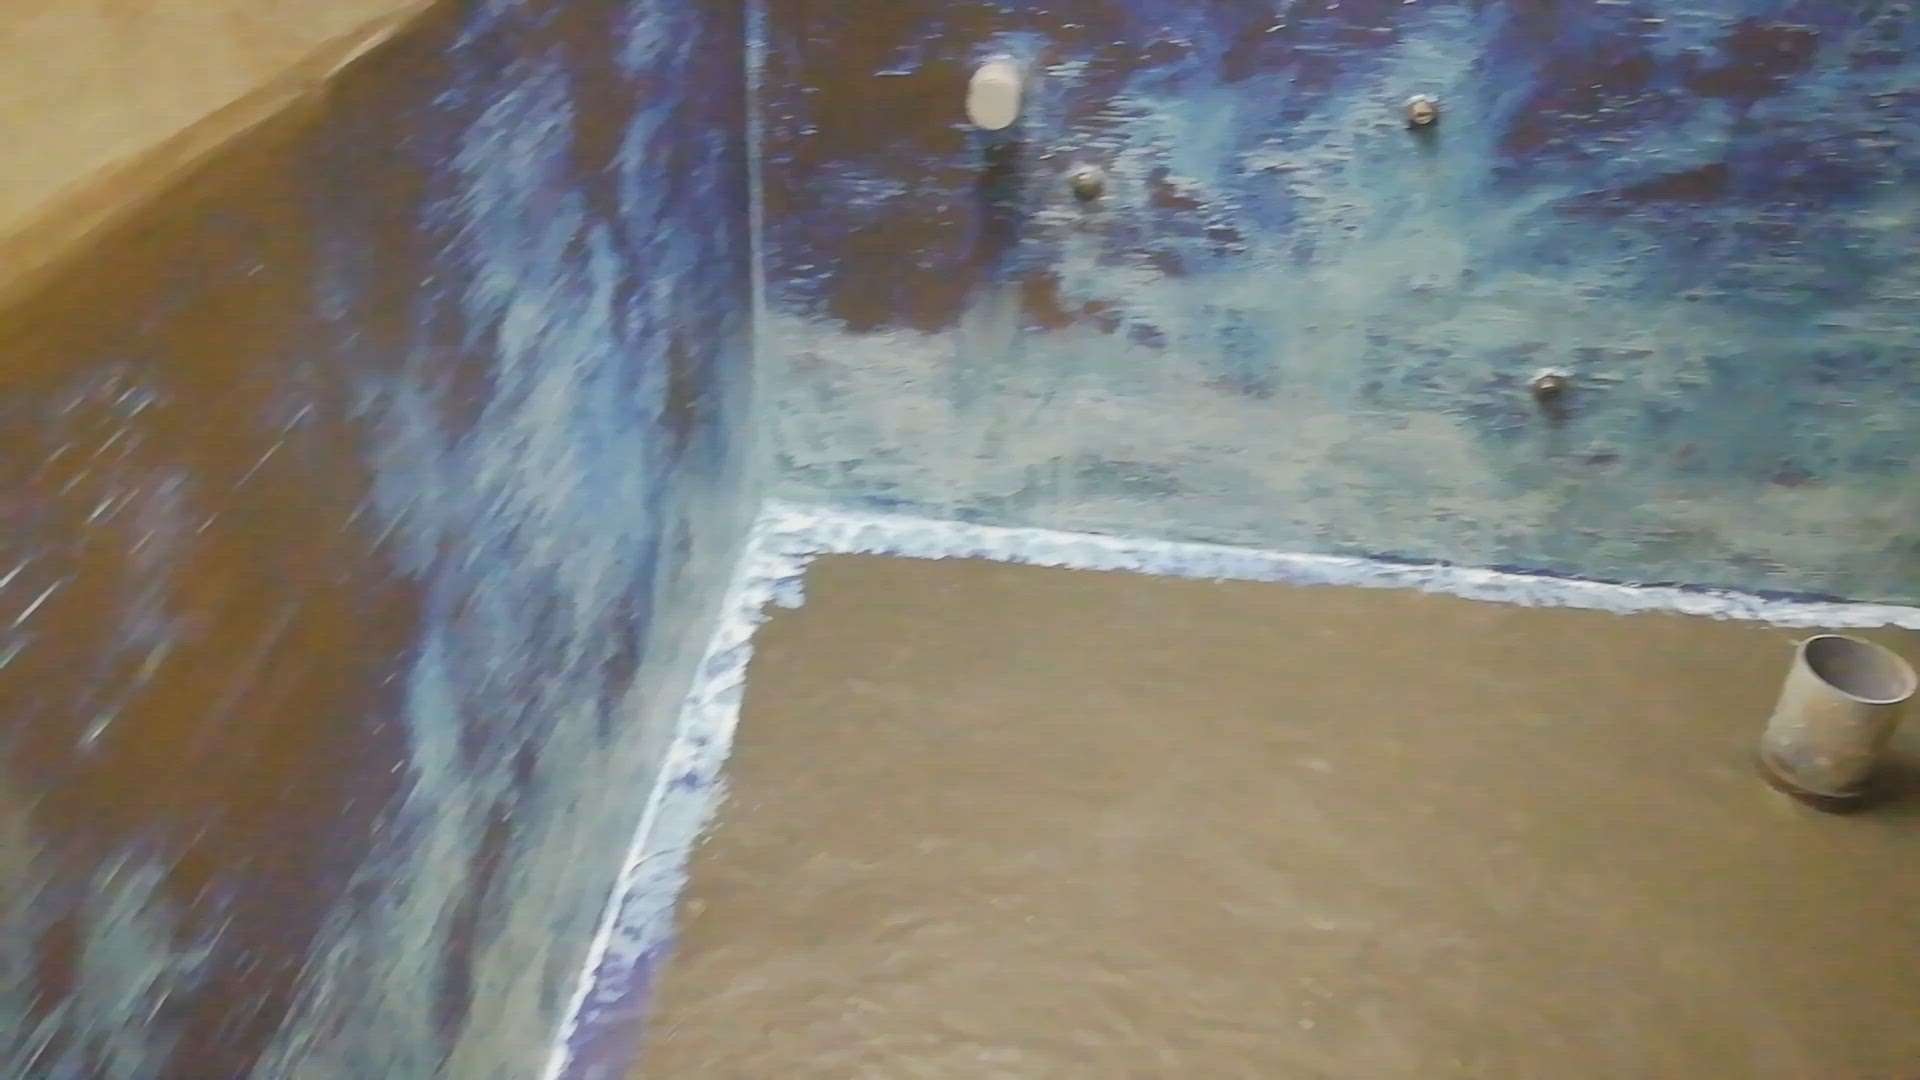 FIBERGLASS MESH COTTING
BATHROOM